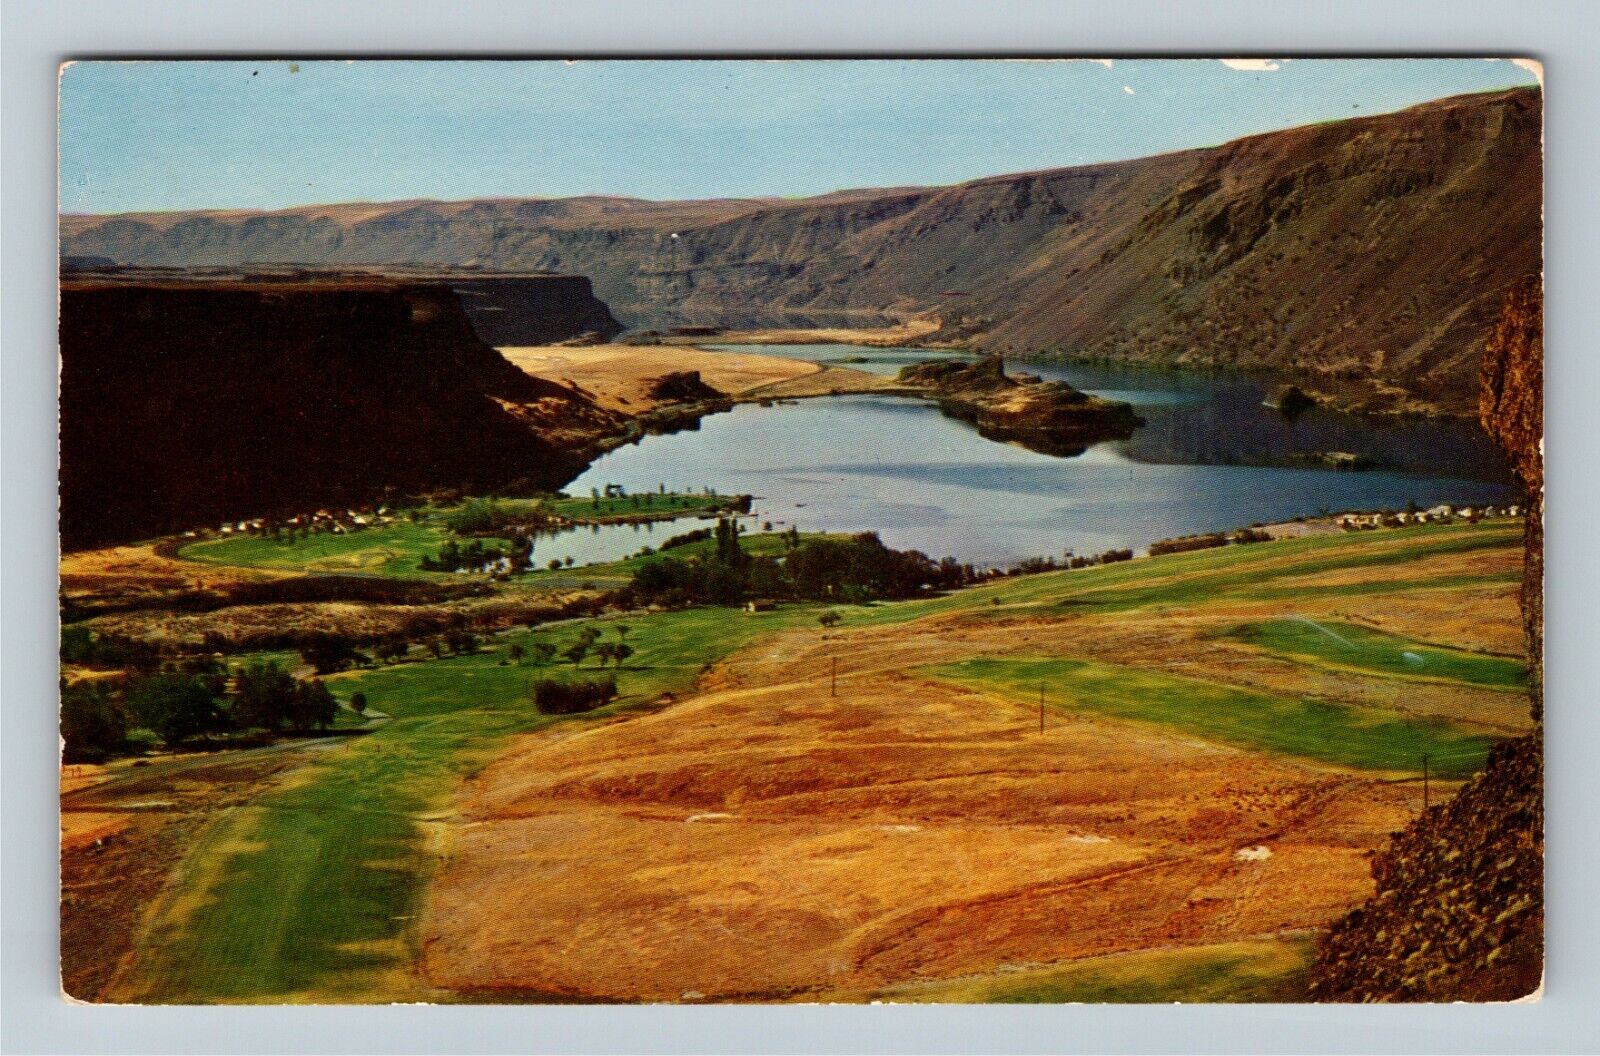 Sun Lakes State Park, WA-Washington, Scenic Greeting, Vintage Postcard